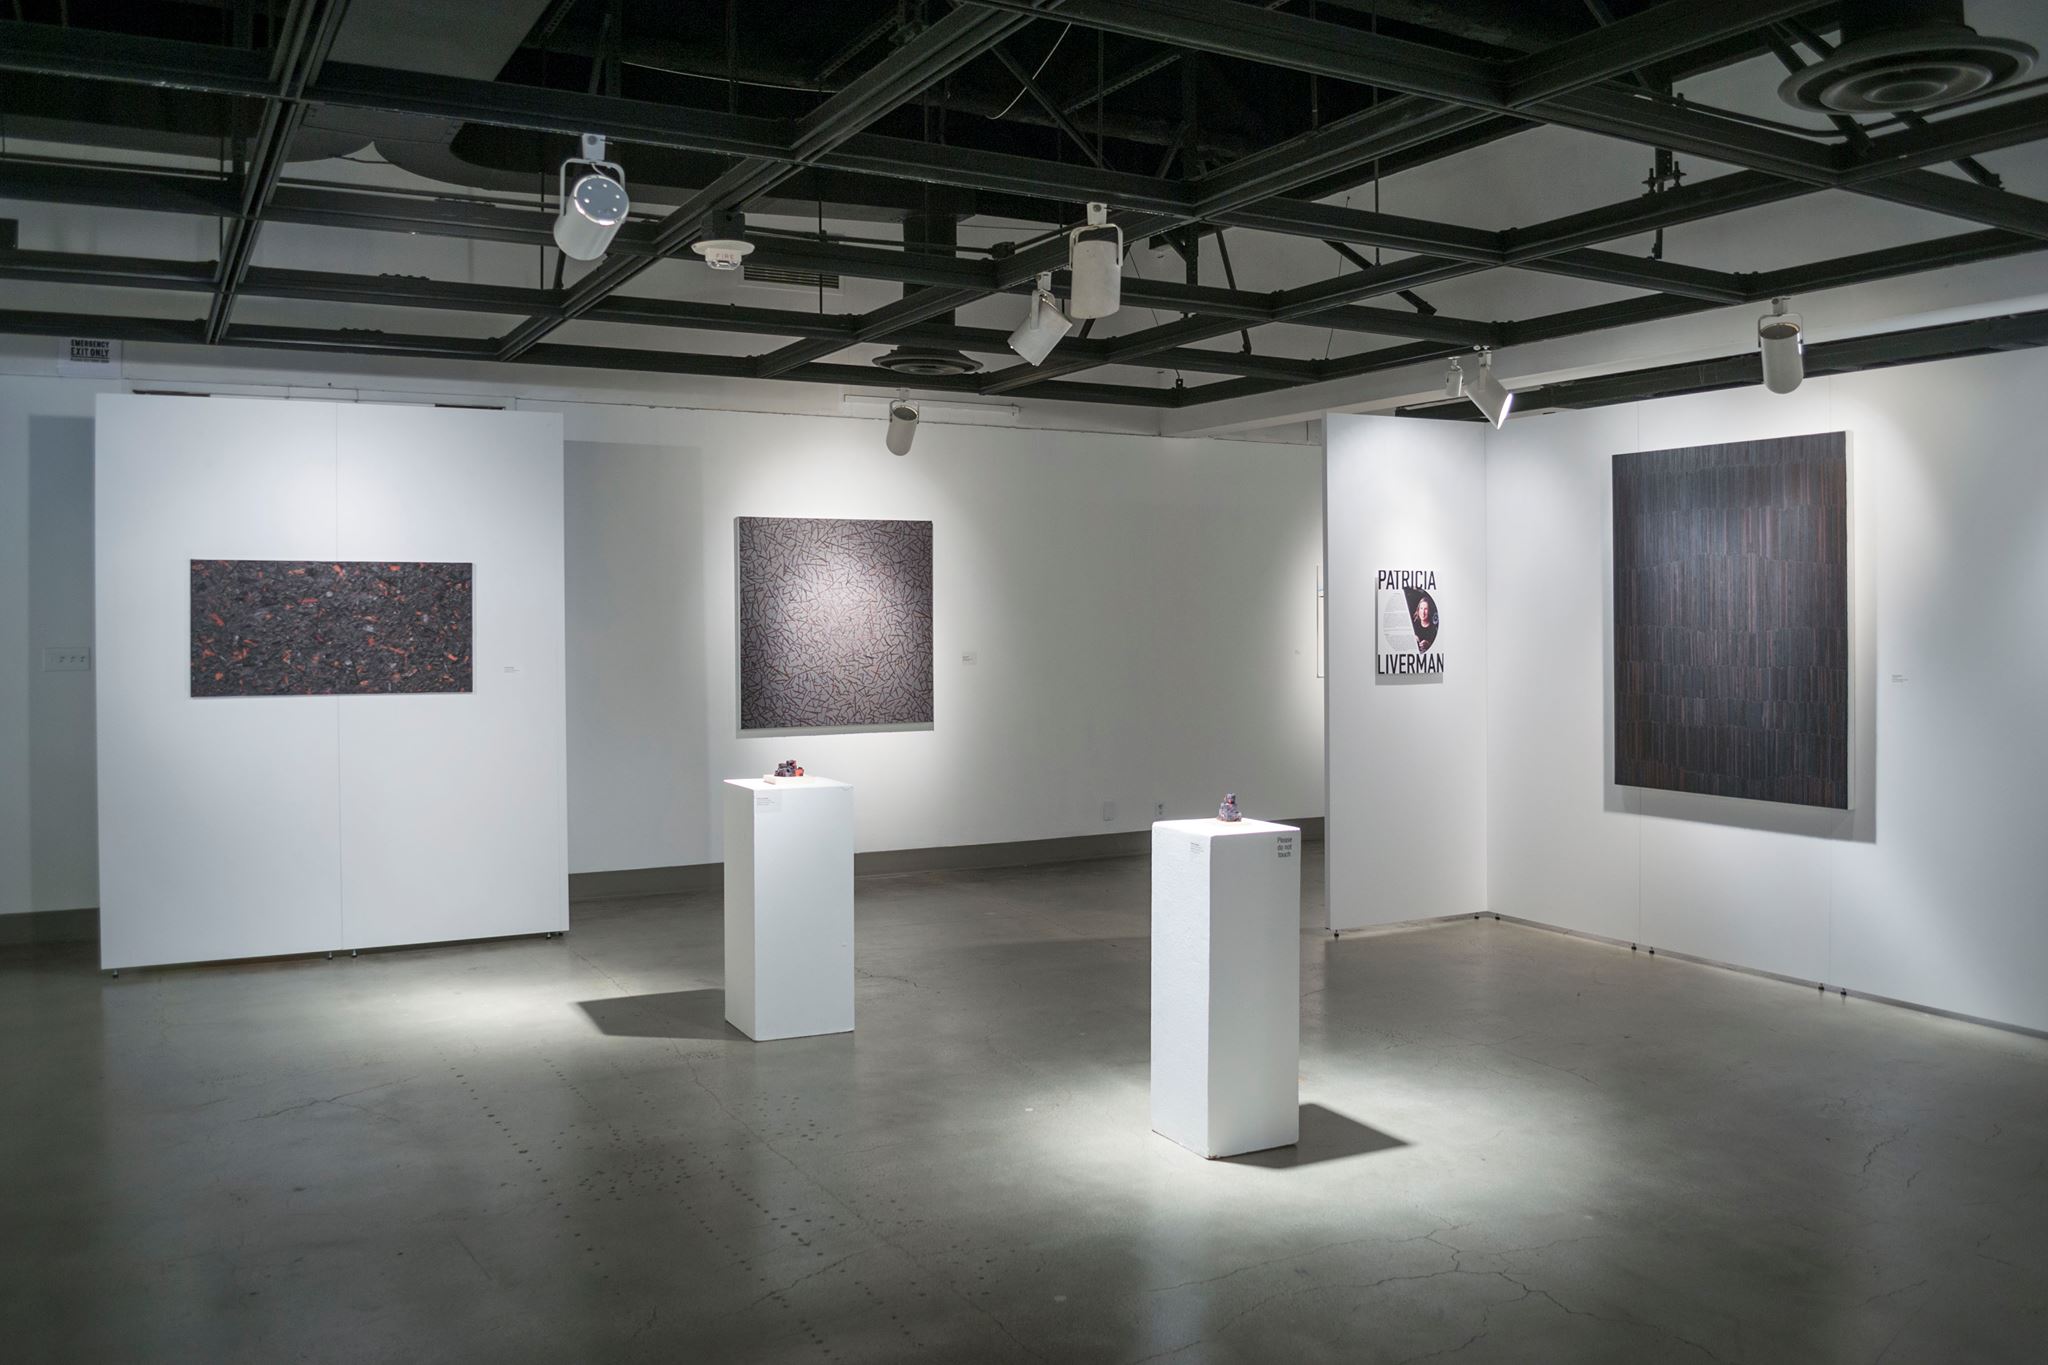 Installation View, Back Gallery, Francisco Alvarado, Patricia Liverman, Karin Skiba & Jim Zver Exhibition, July 7, 2014 to August 16, 2014